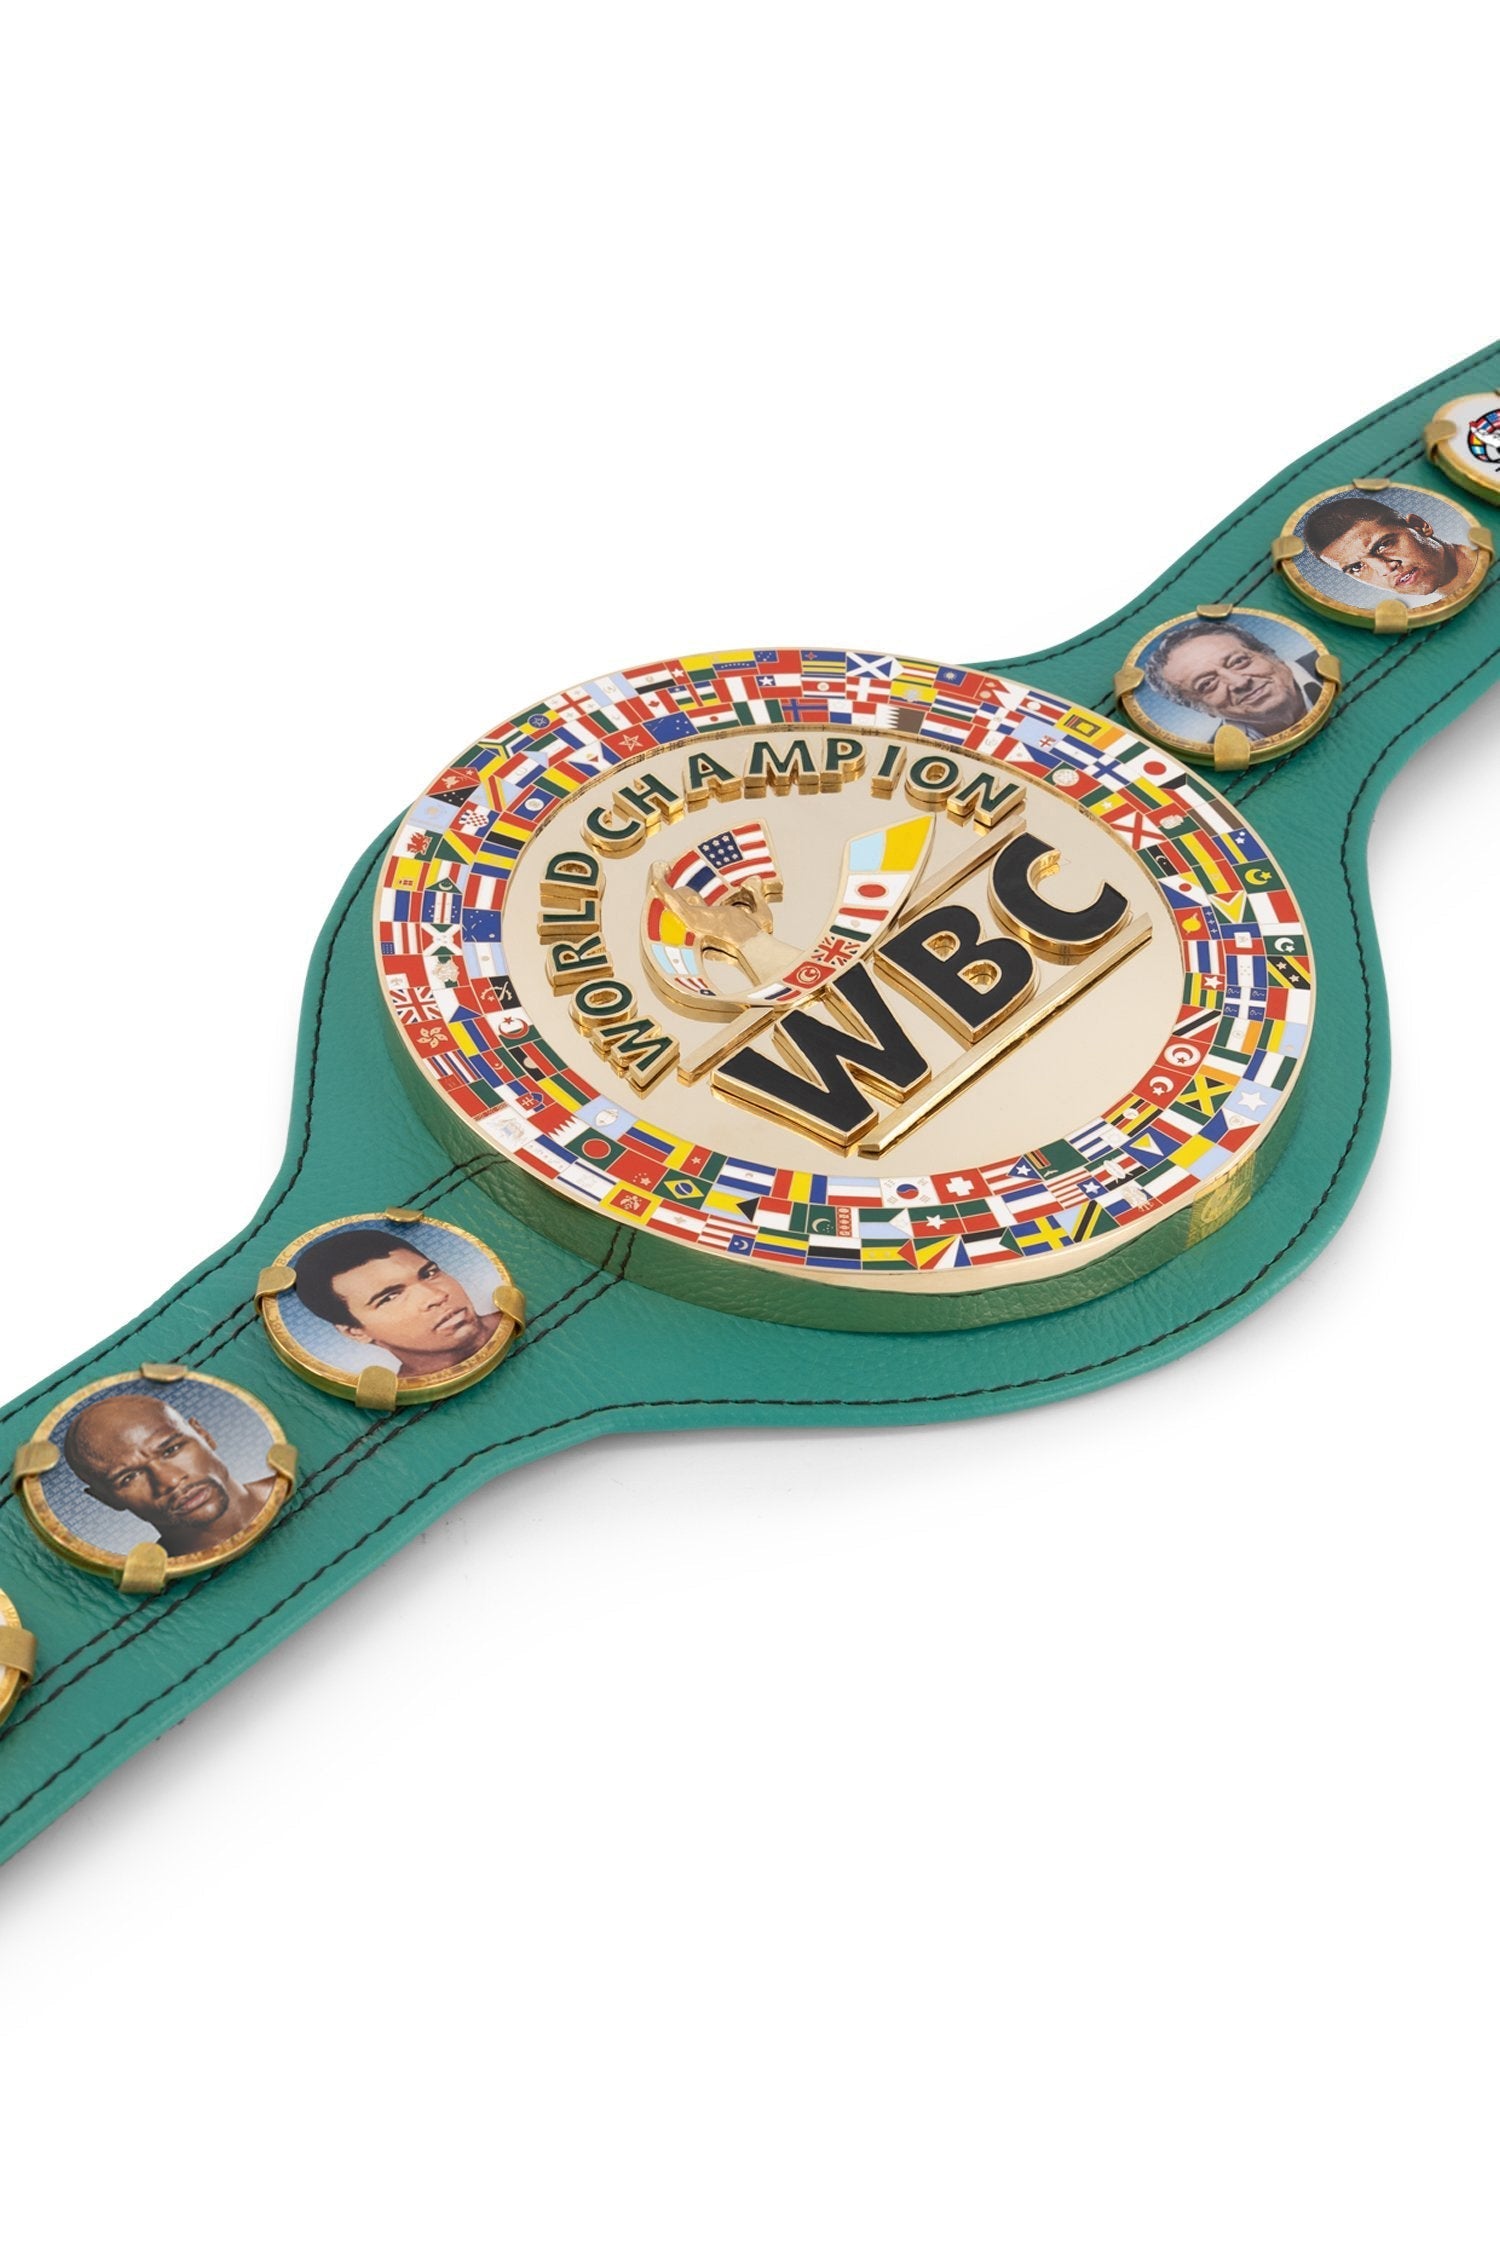 WBC Store Replica Belts WBC Championship Belt  "Historic Fights" Floyd Mayweather Jr. vs. Víctor Ortiz